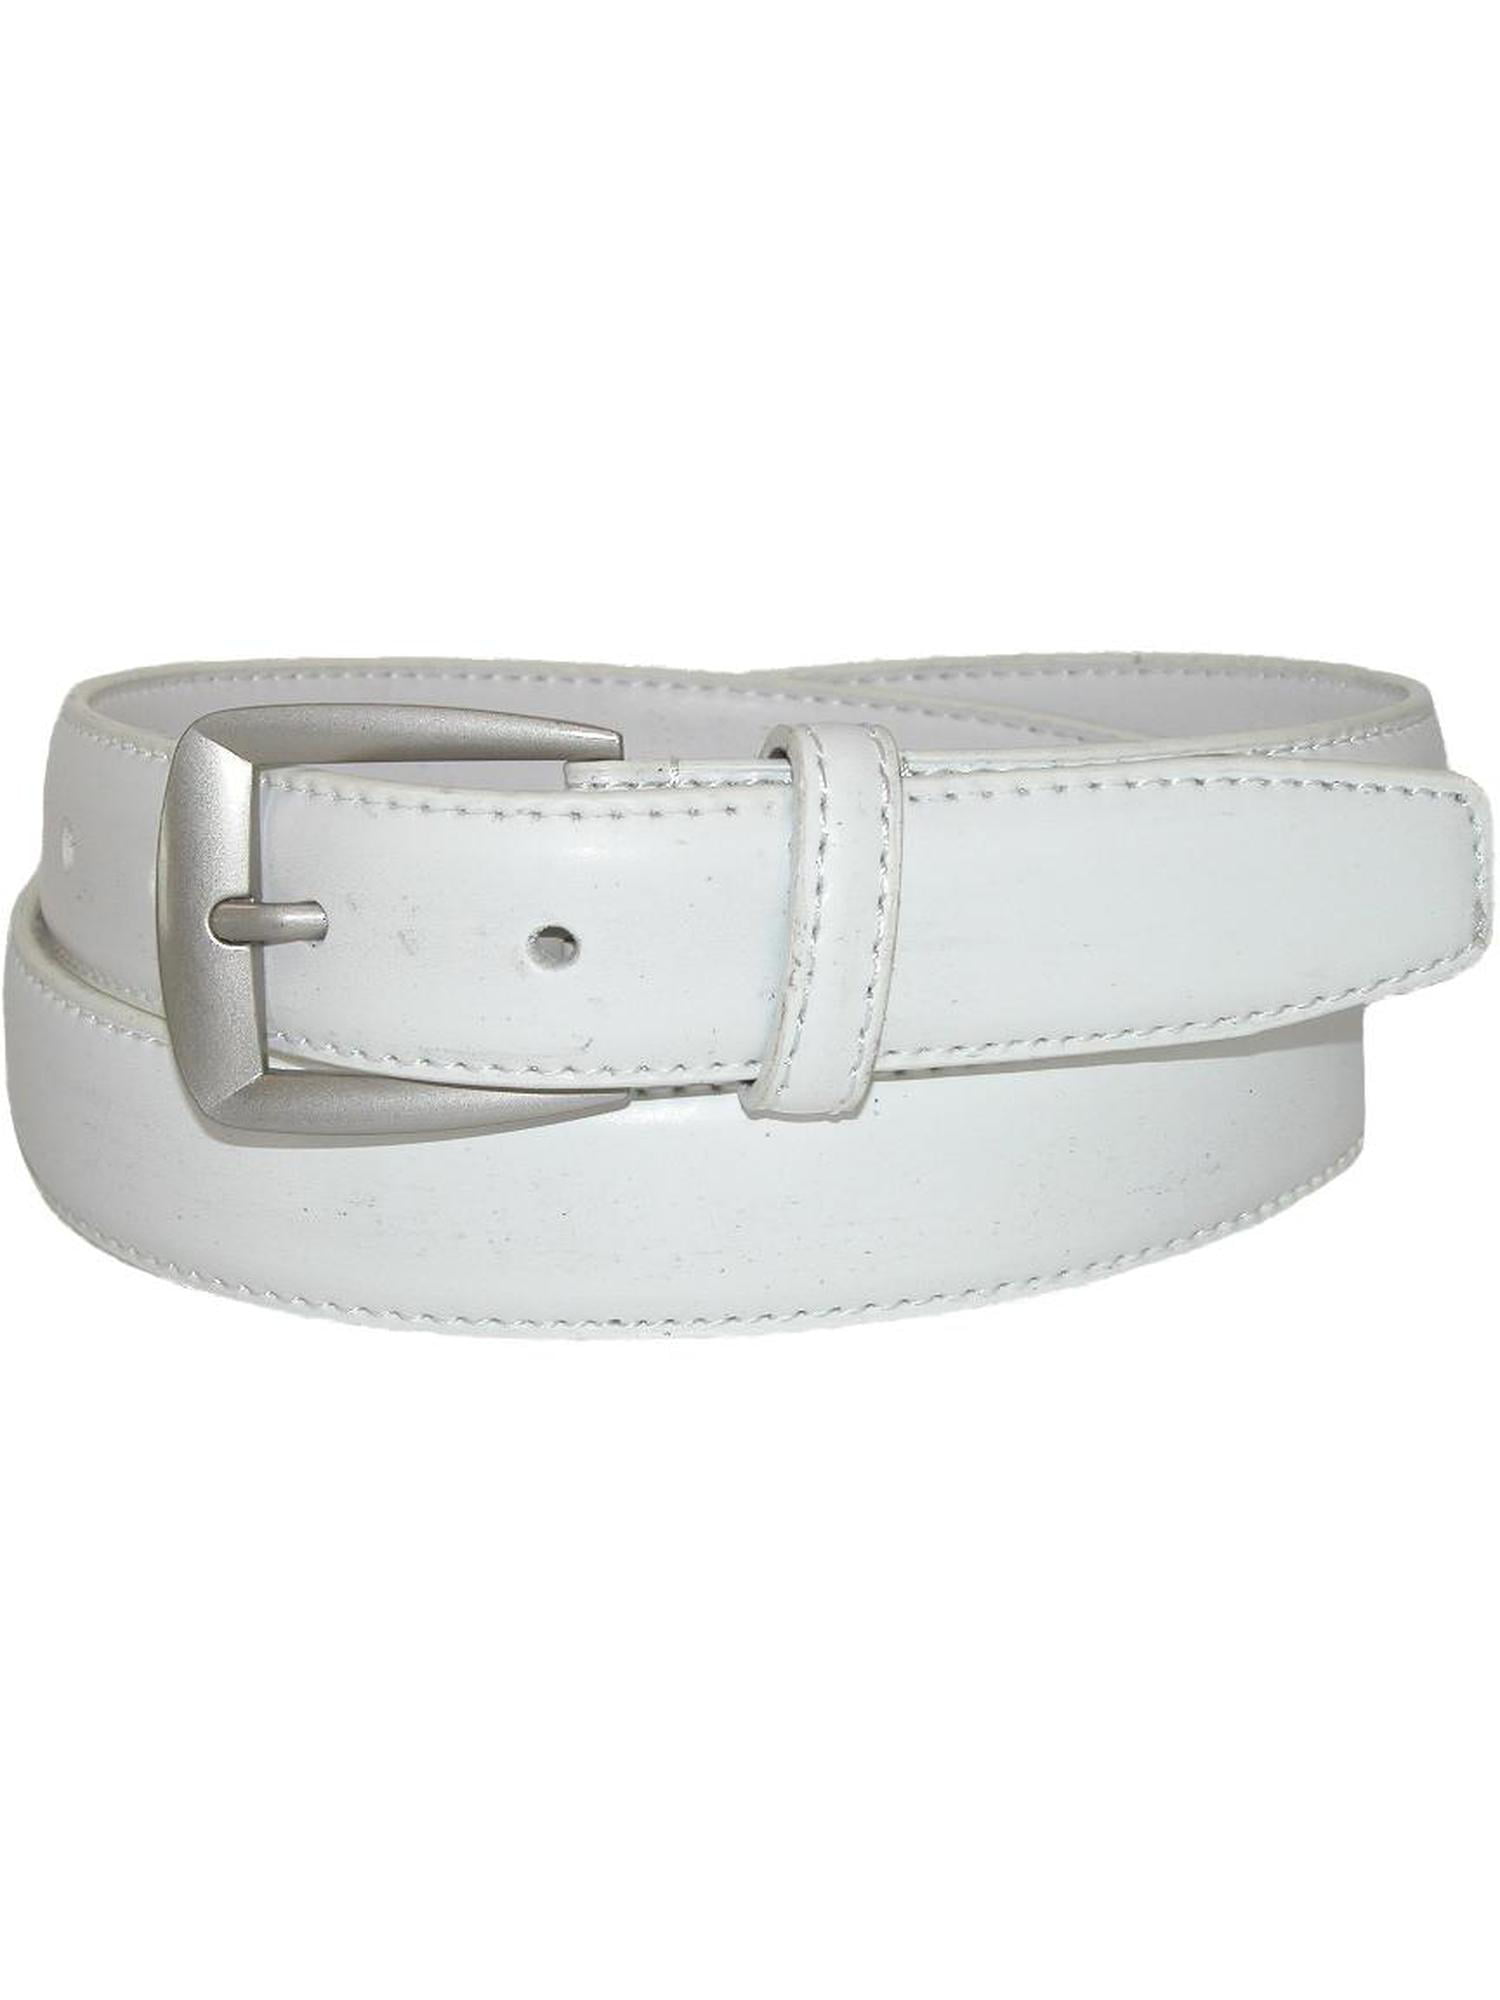 CTM - Size 44 Mens Leather 1 1/4 inch Basic Dress Belt, White - 0